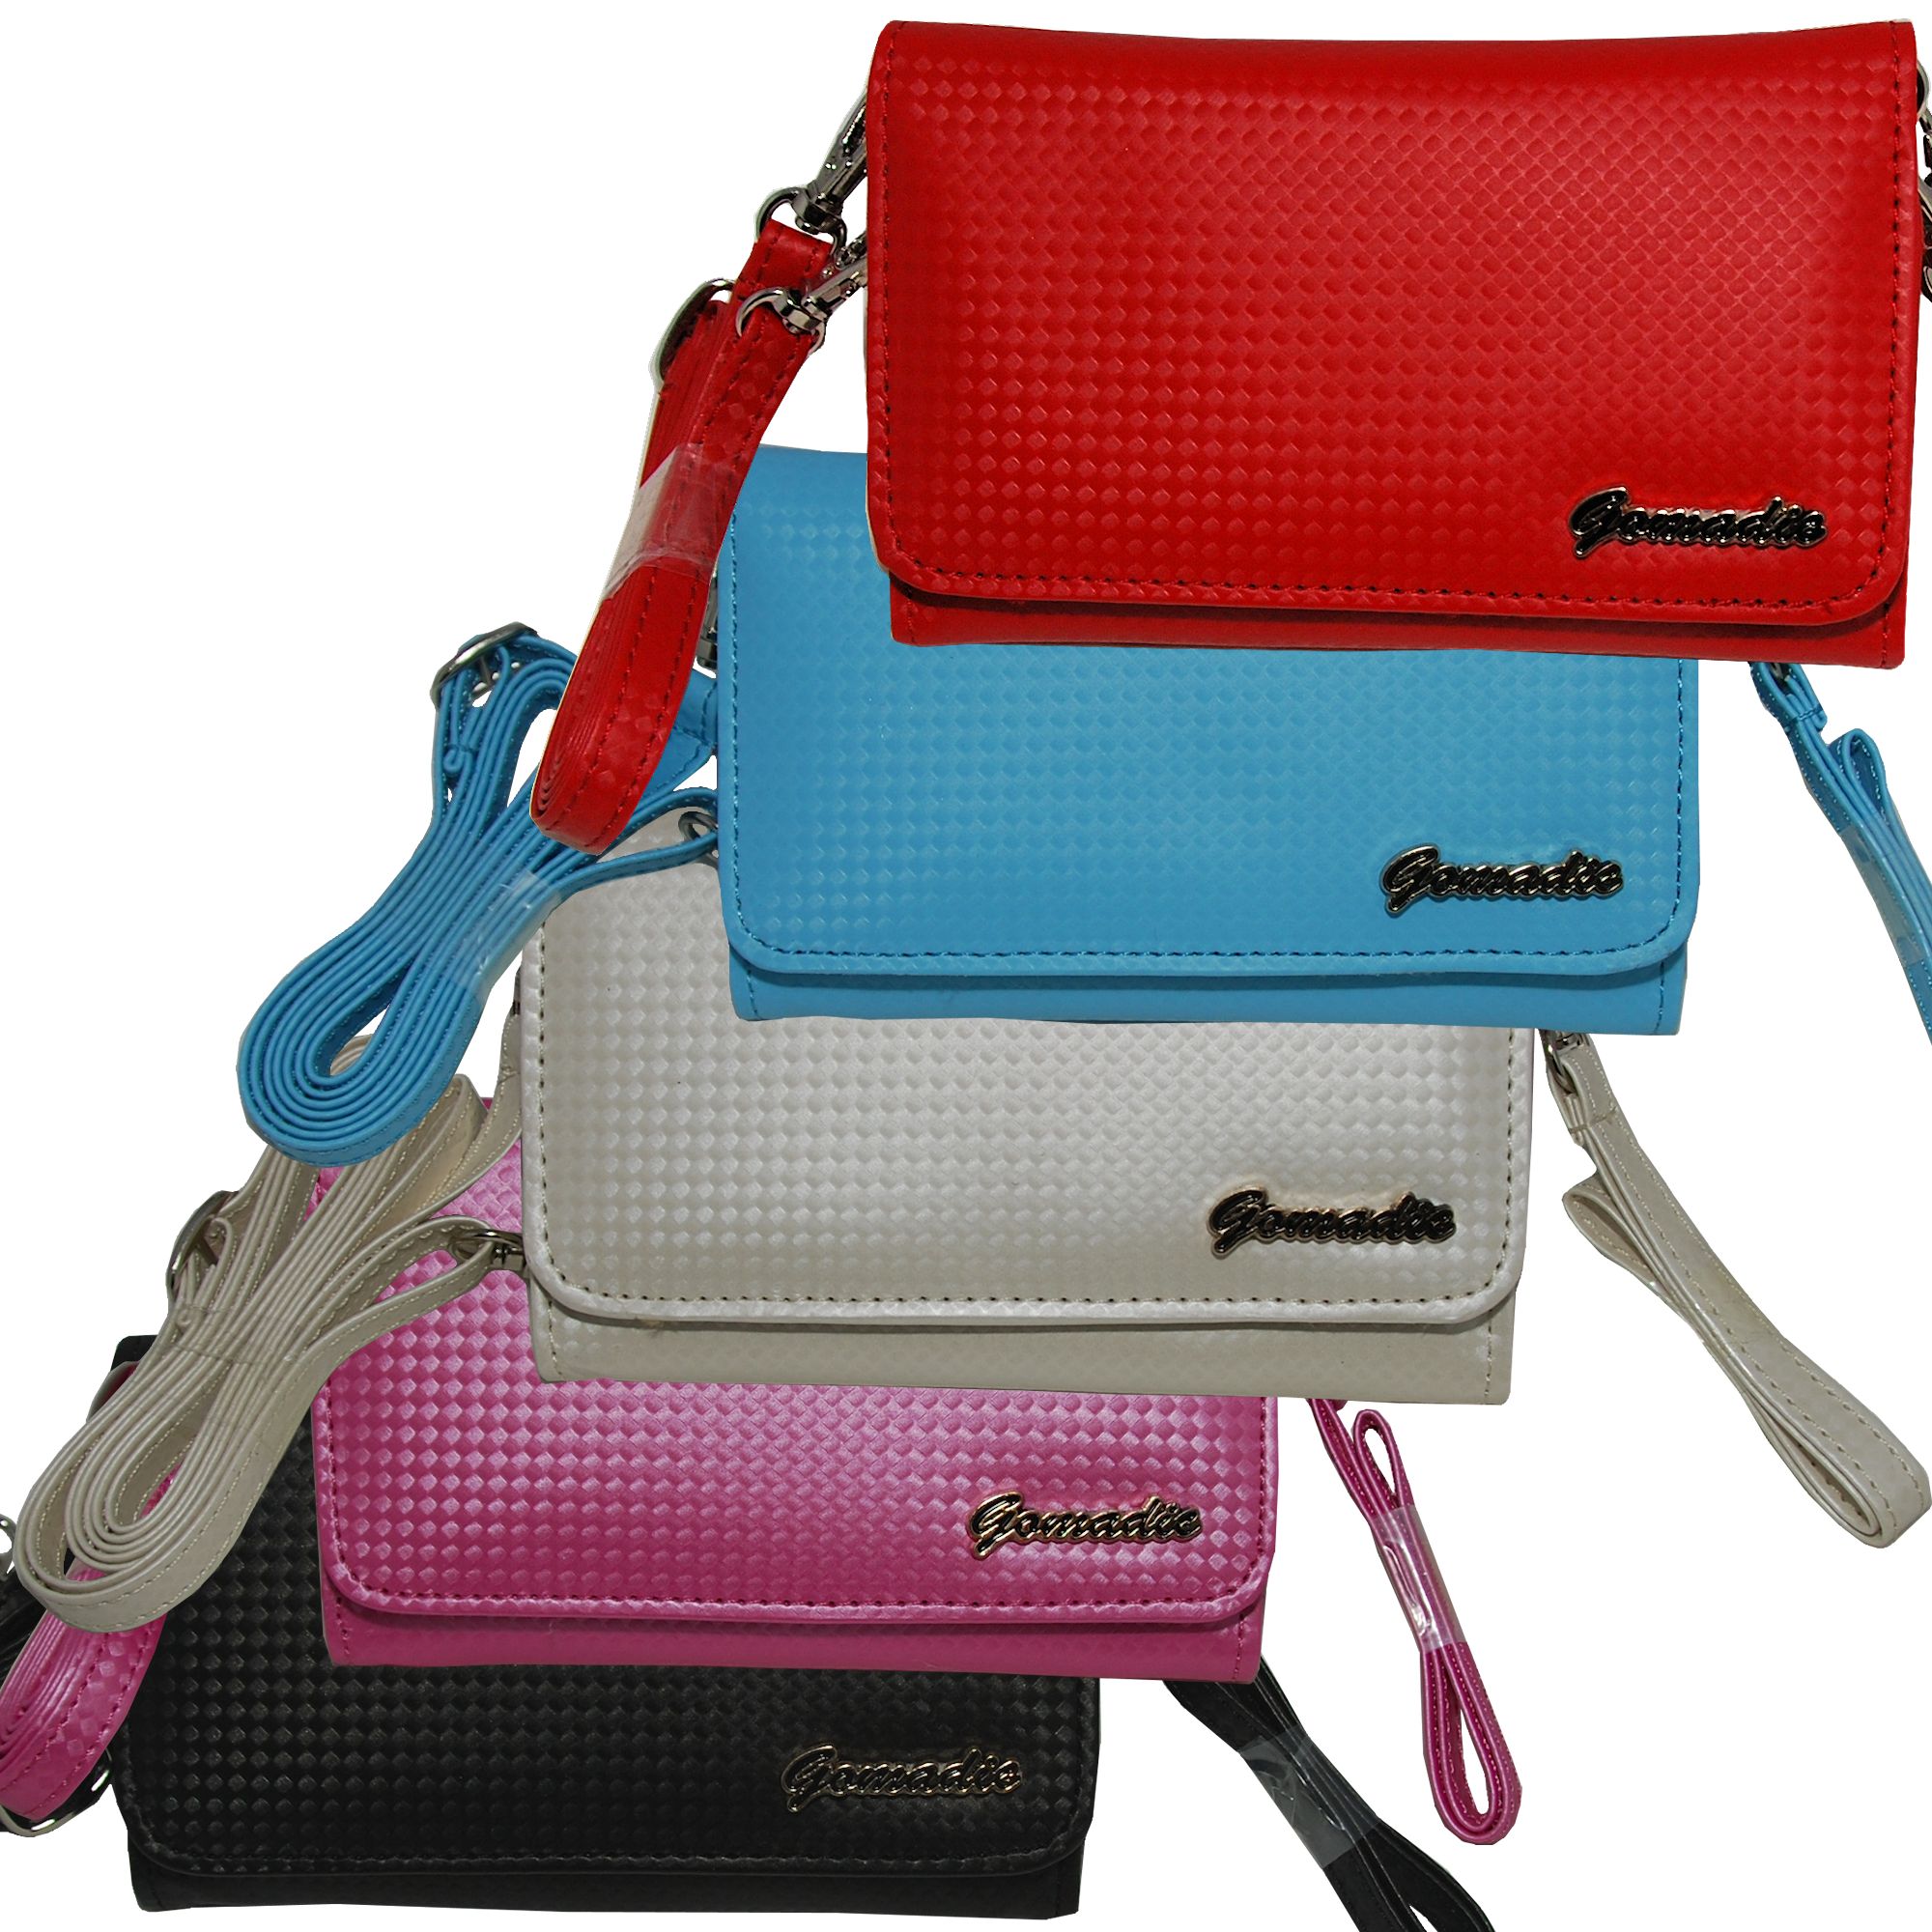 Purse Handbag Case for the Nokia Slide  - Color Options Blue Pink White Black and Red